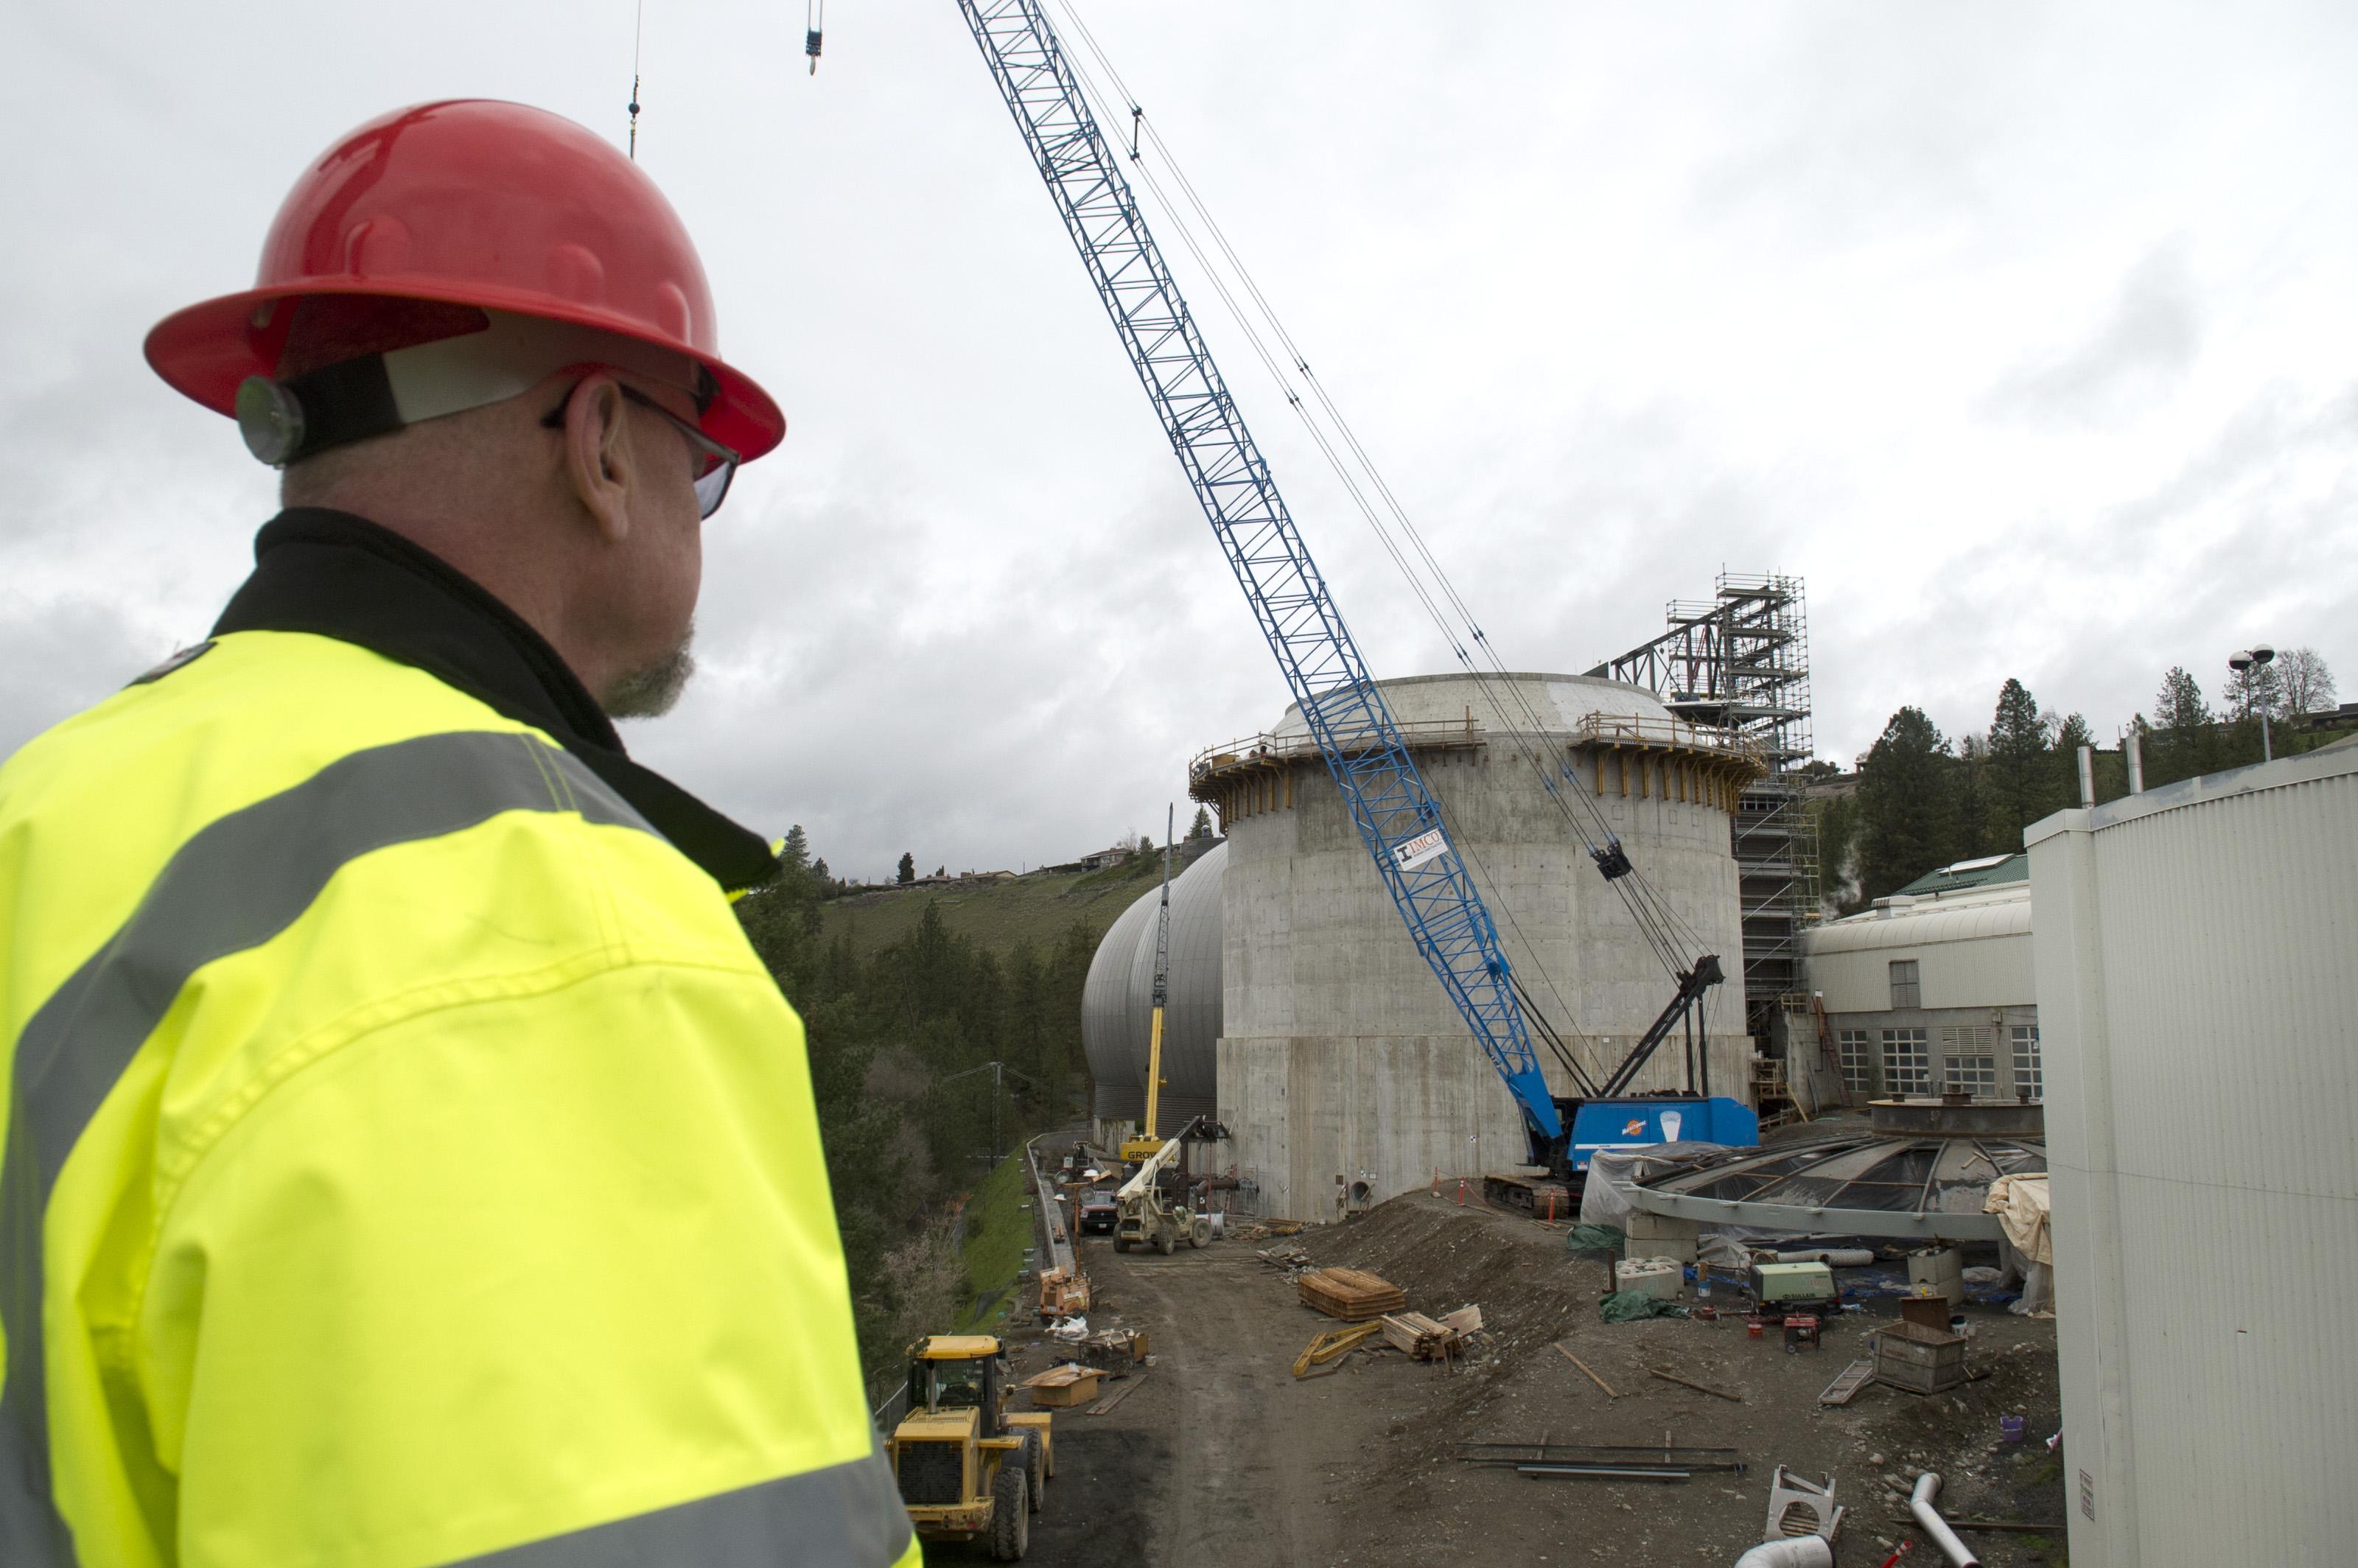 Spokane wastewater treatment plant jobs